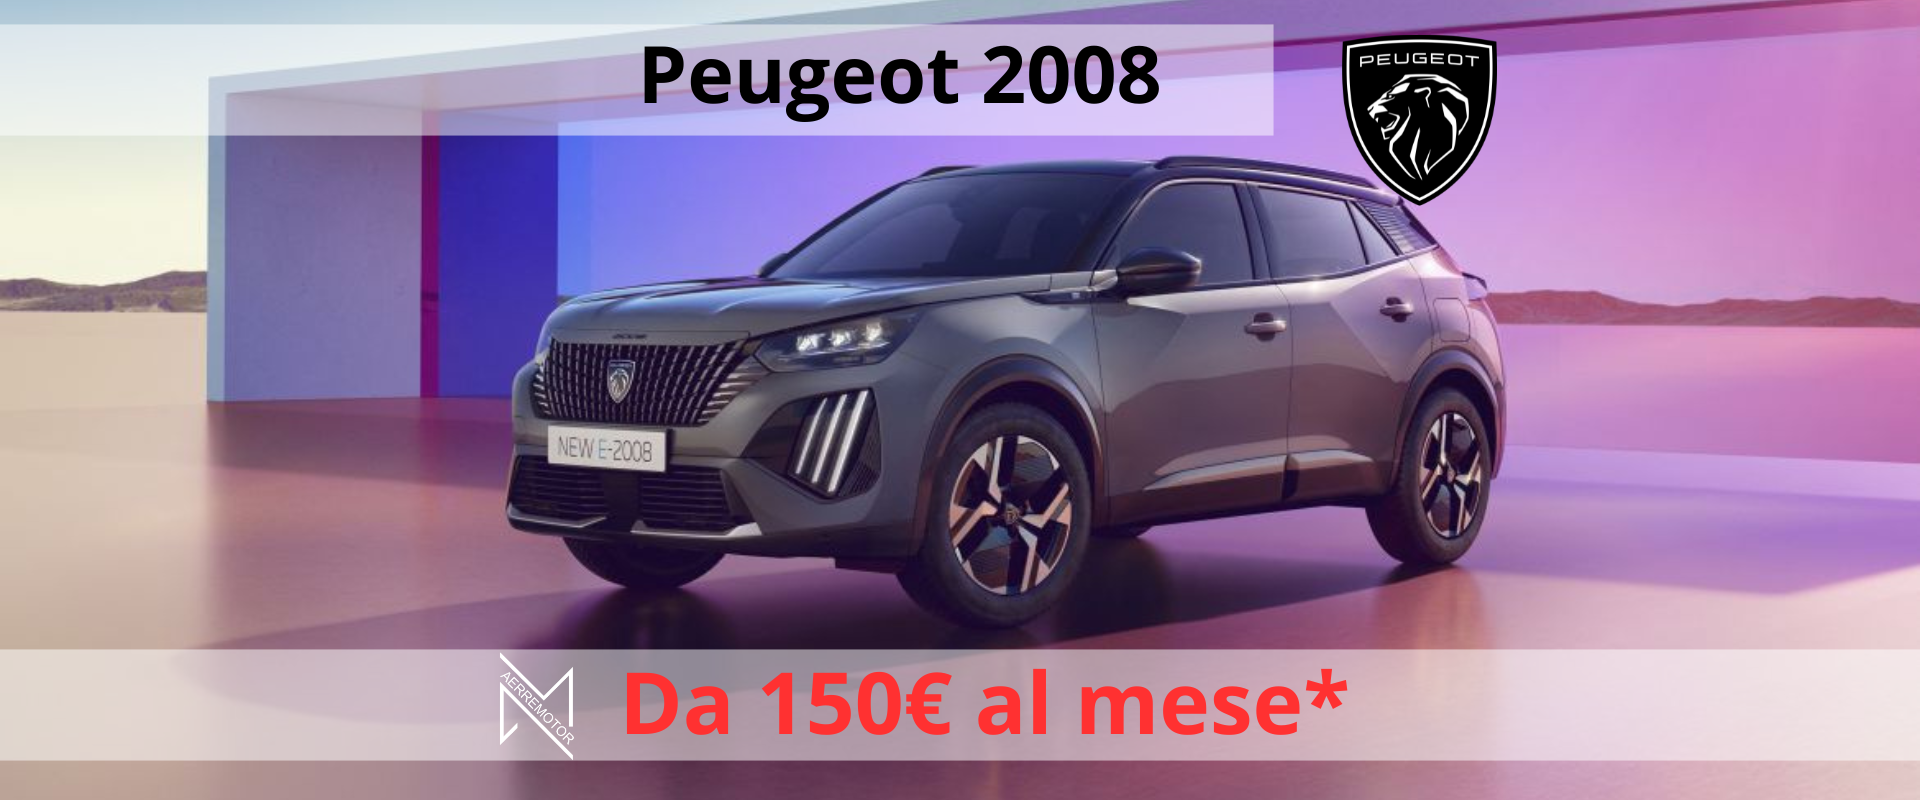 Peugeot nuovo 2008